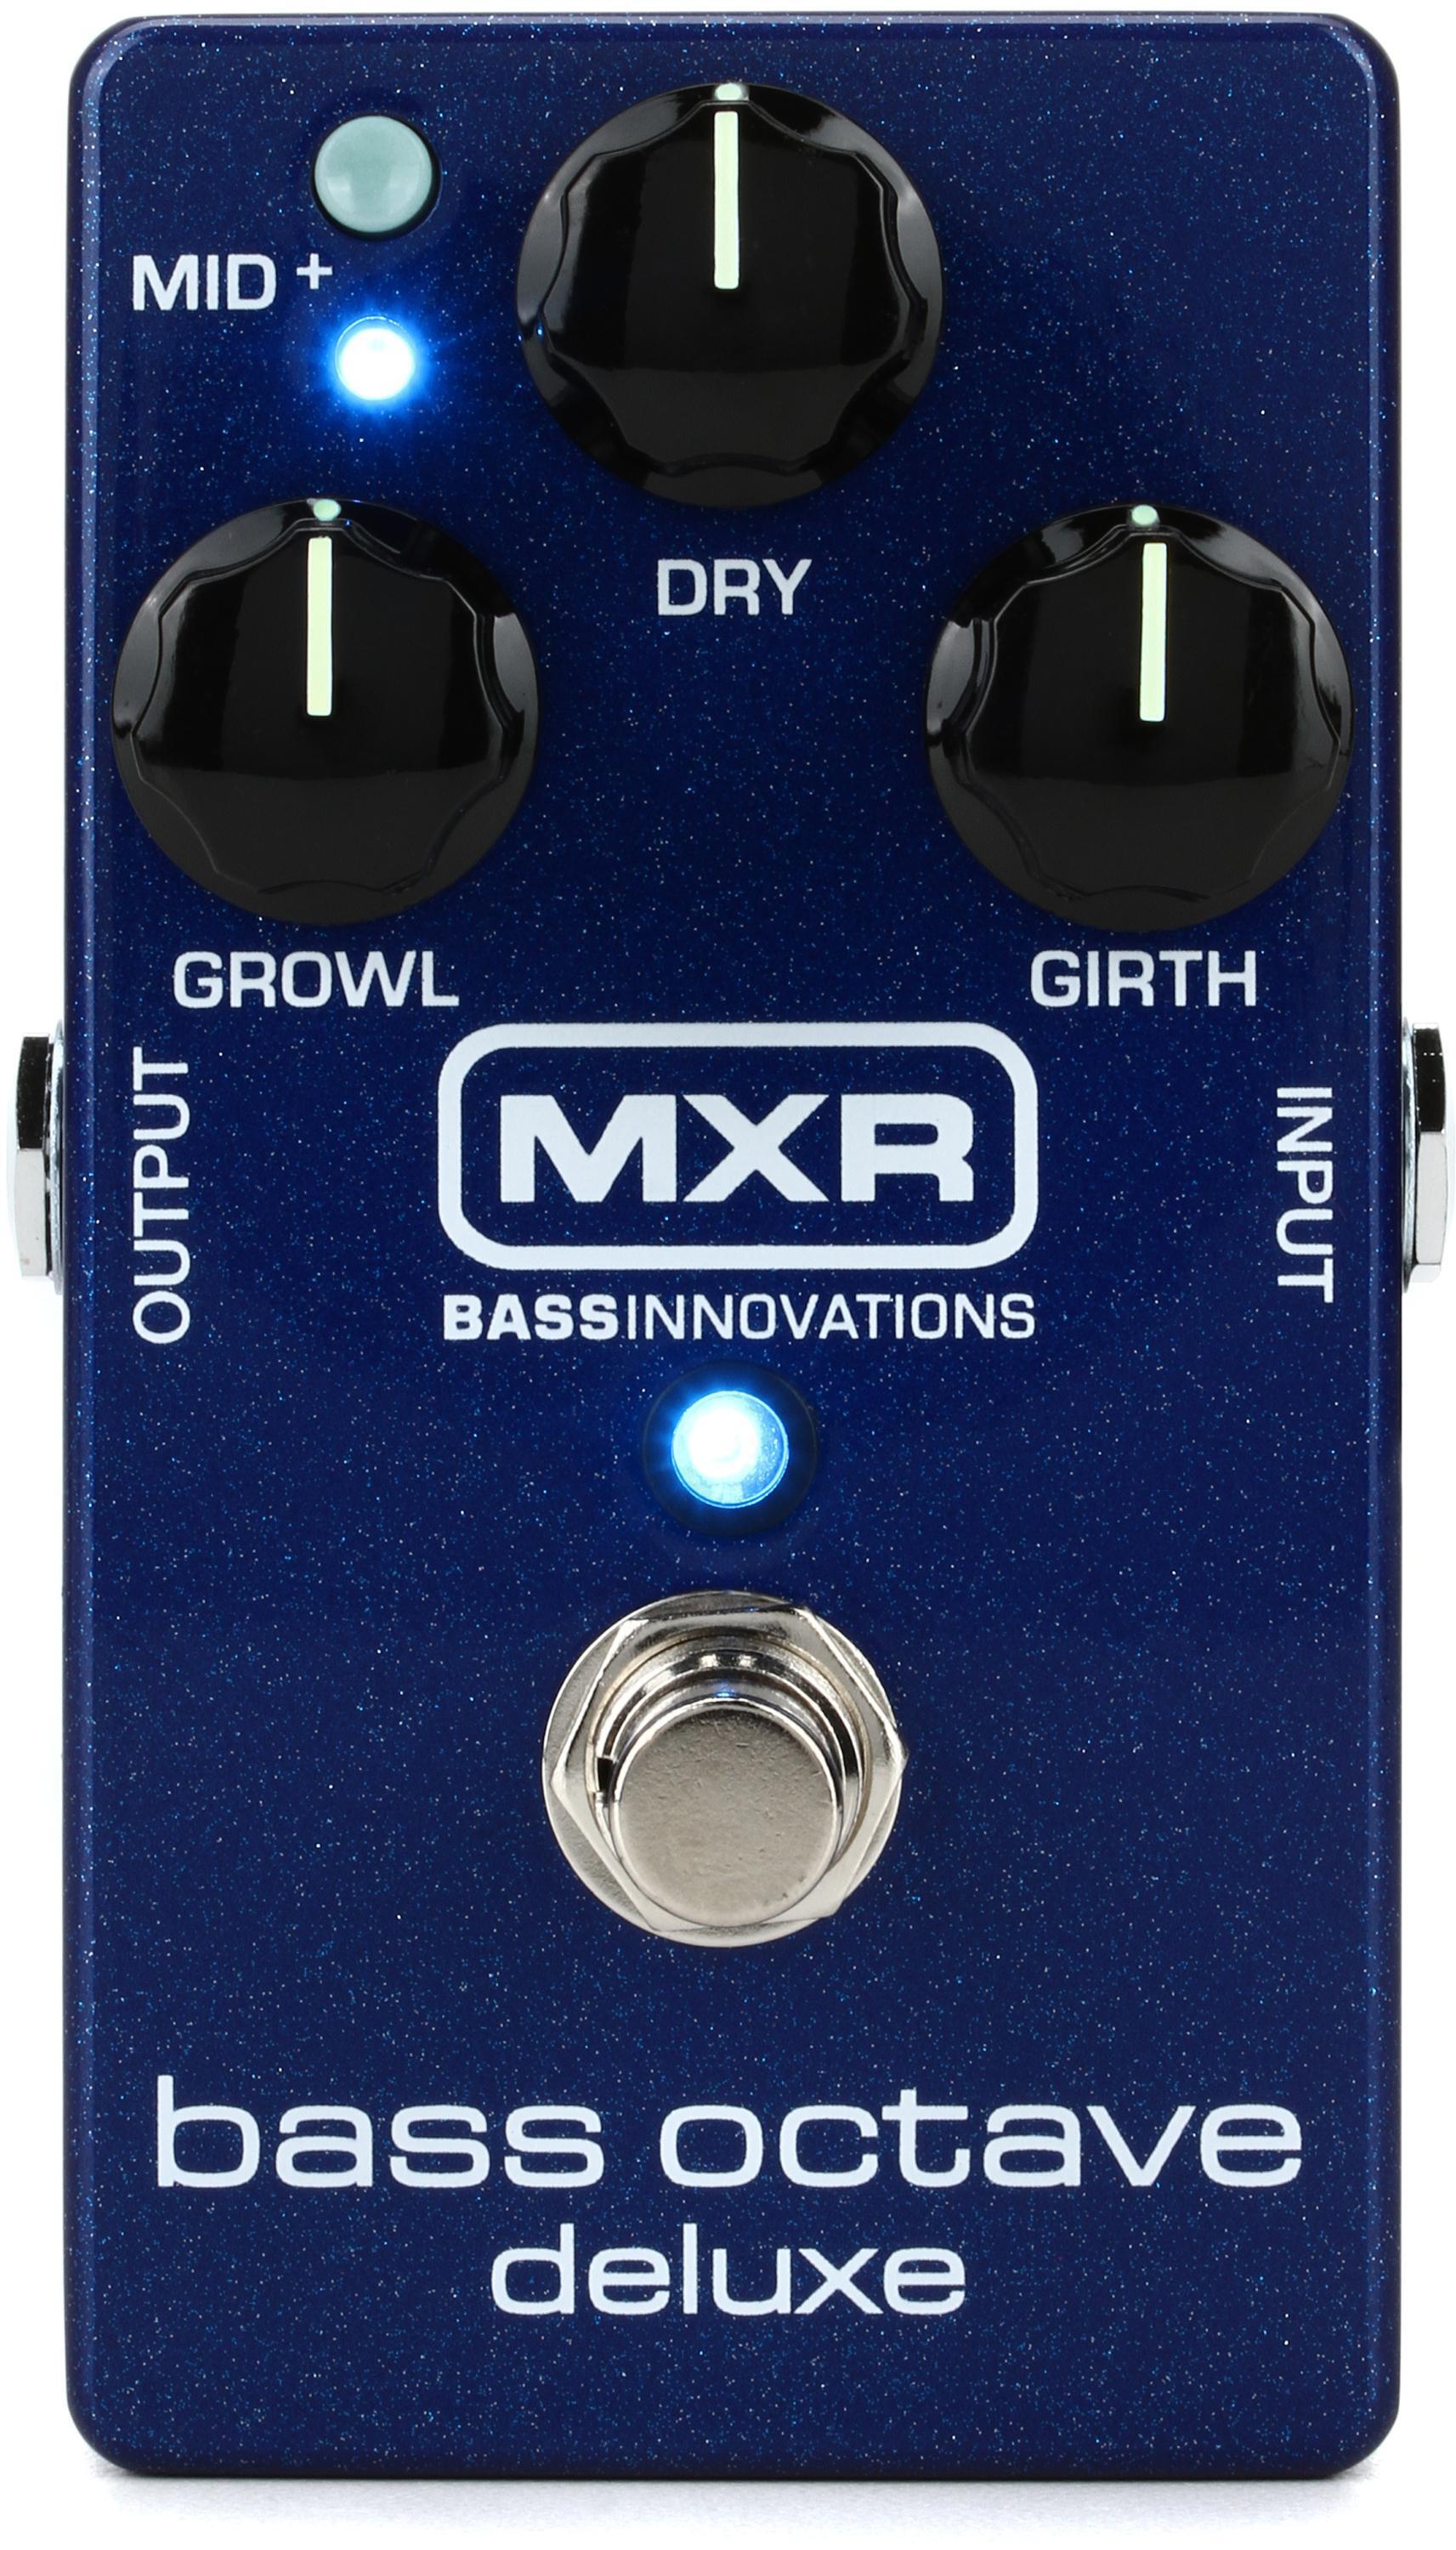 Bundled Item: MXR M288 Bass Octave Deluxe Pedal